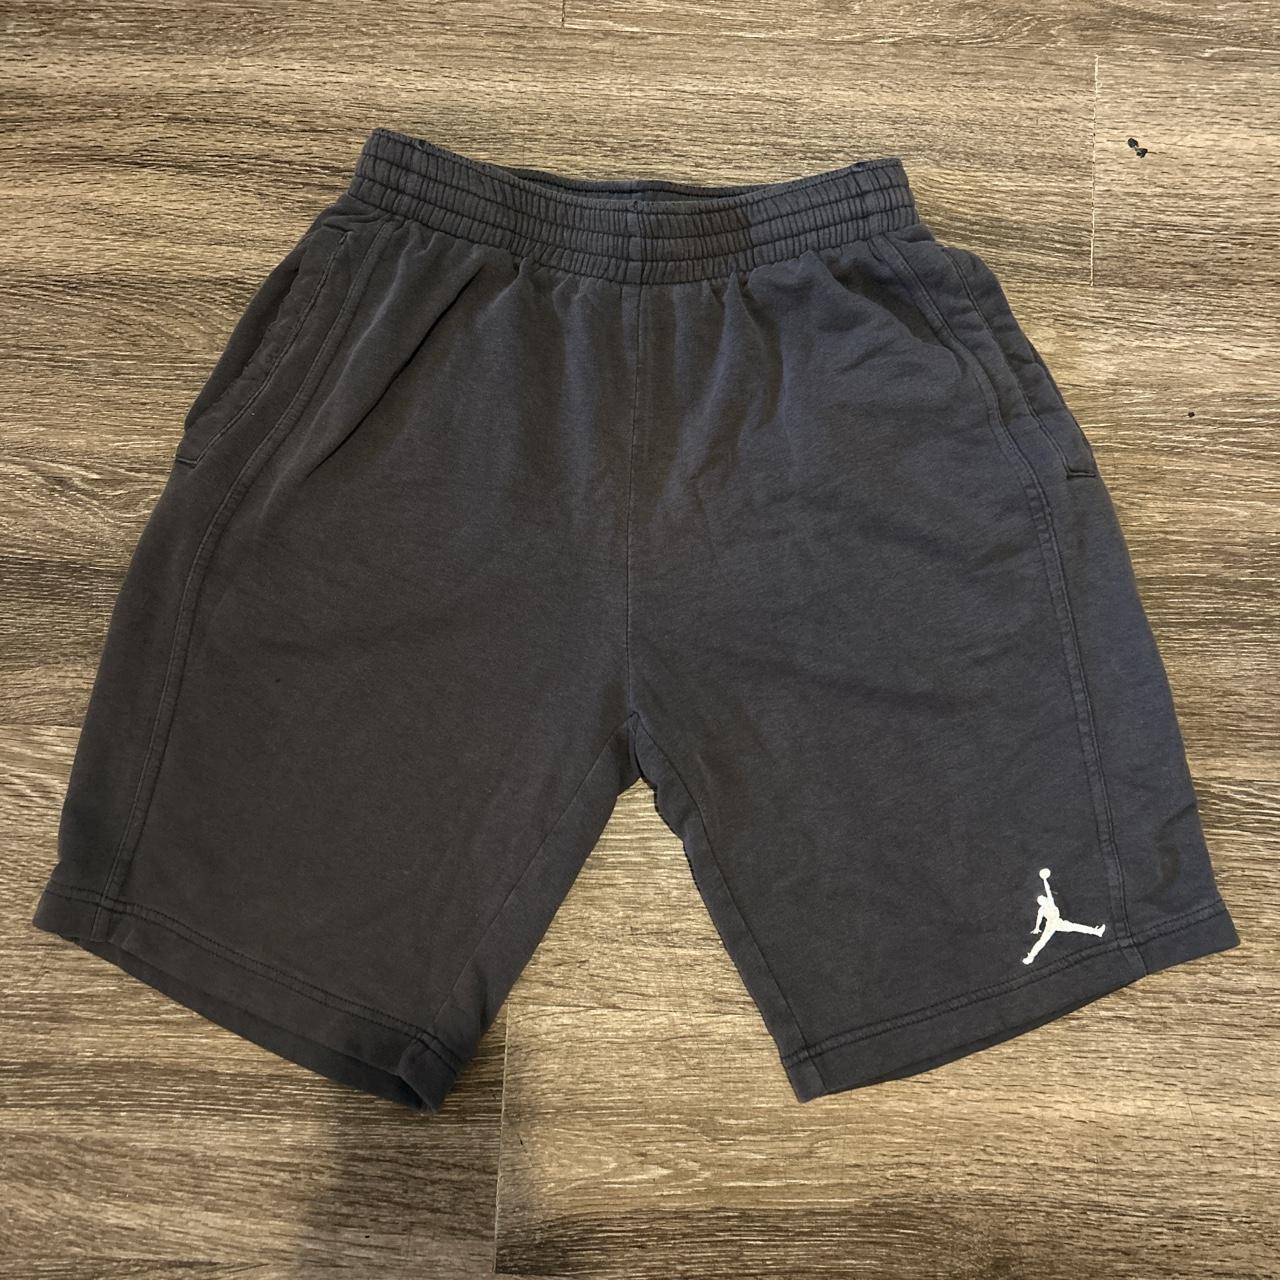 Jordan Men's Grey and White Shorts